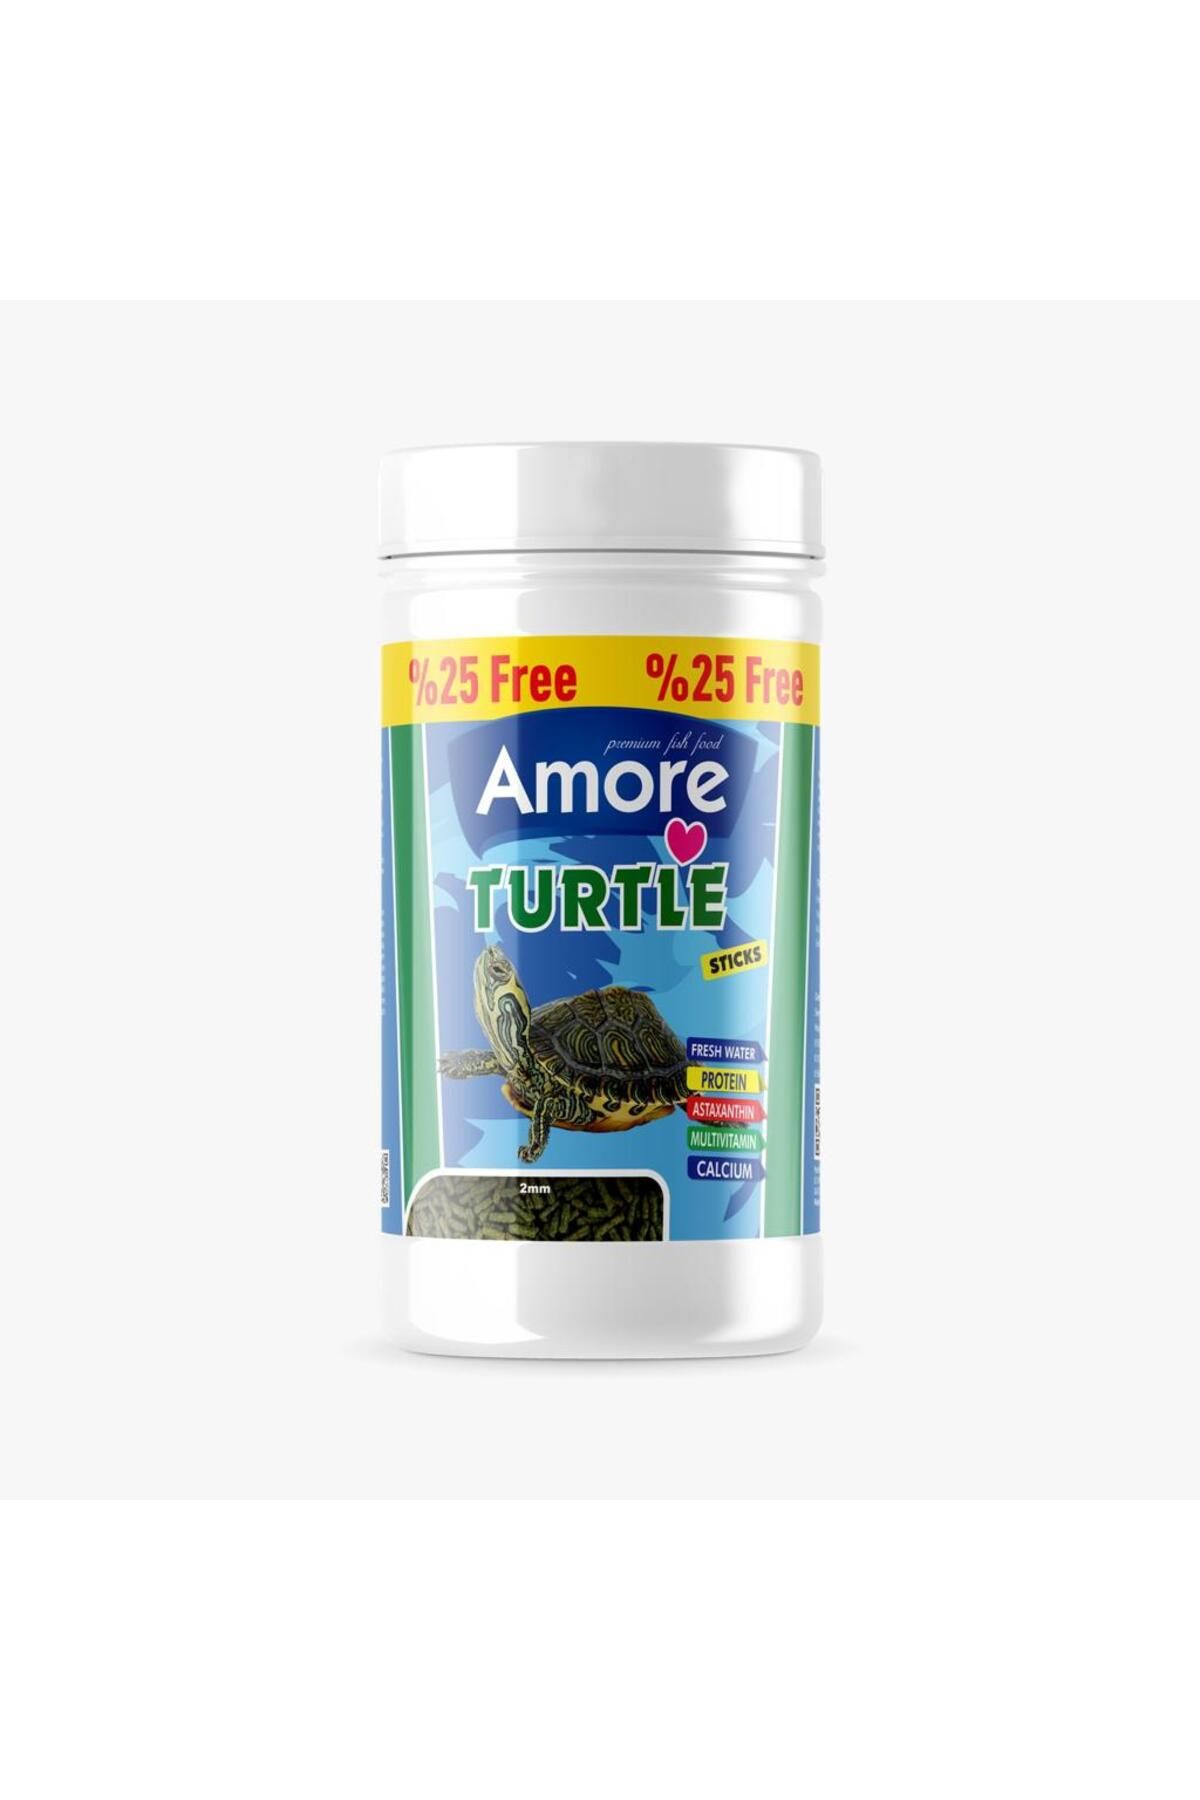 Amore Turtle Green Sticks 4x125 ml Su Kaplumbagasi Yuzen Yemi, Terrapin 100ml